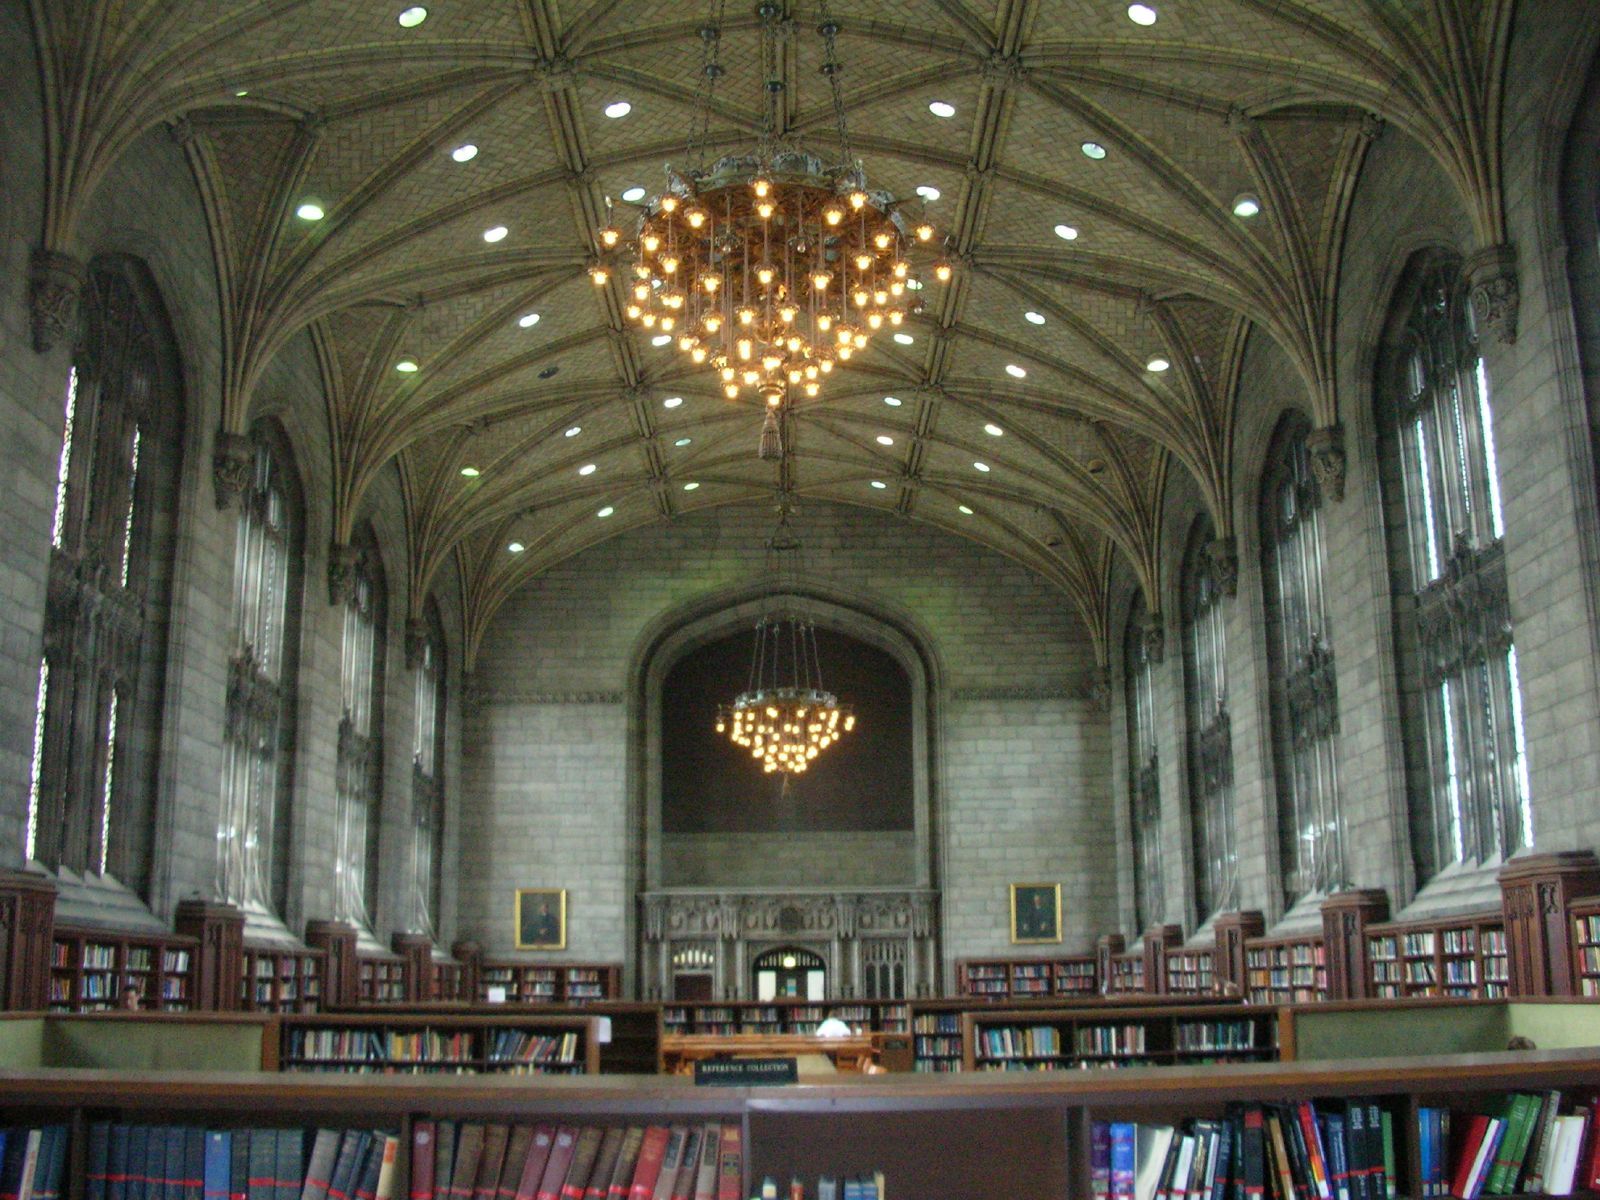 FileHarper Library, interior, University of Chicago